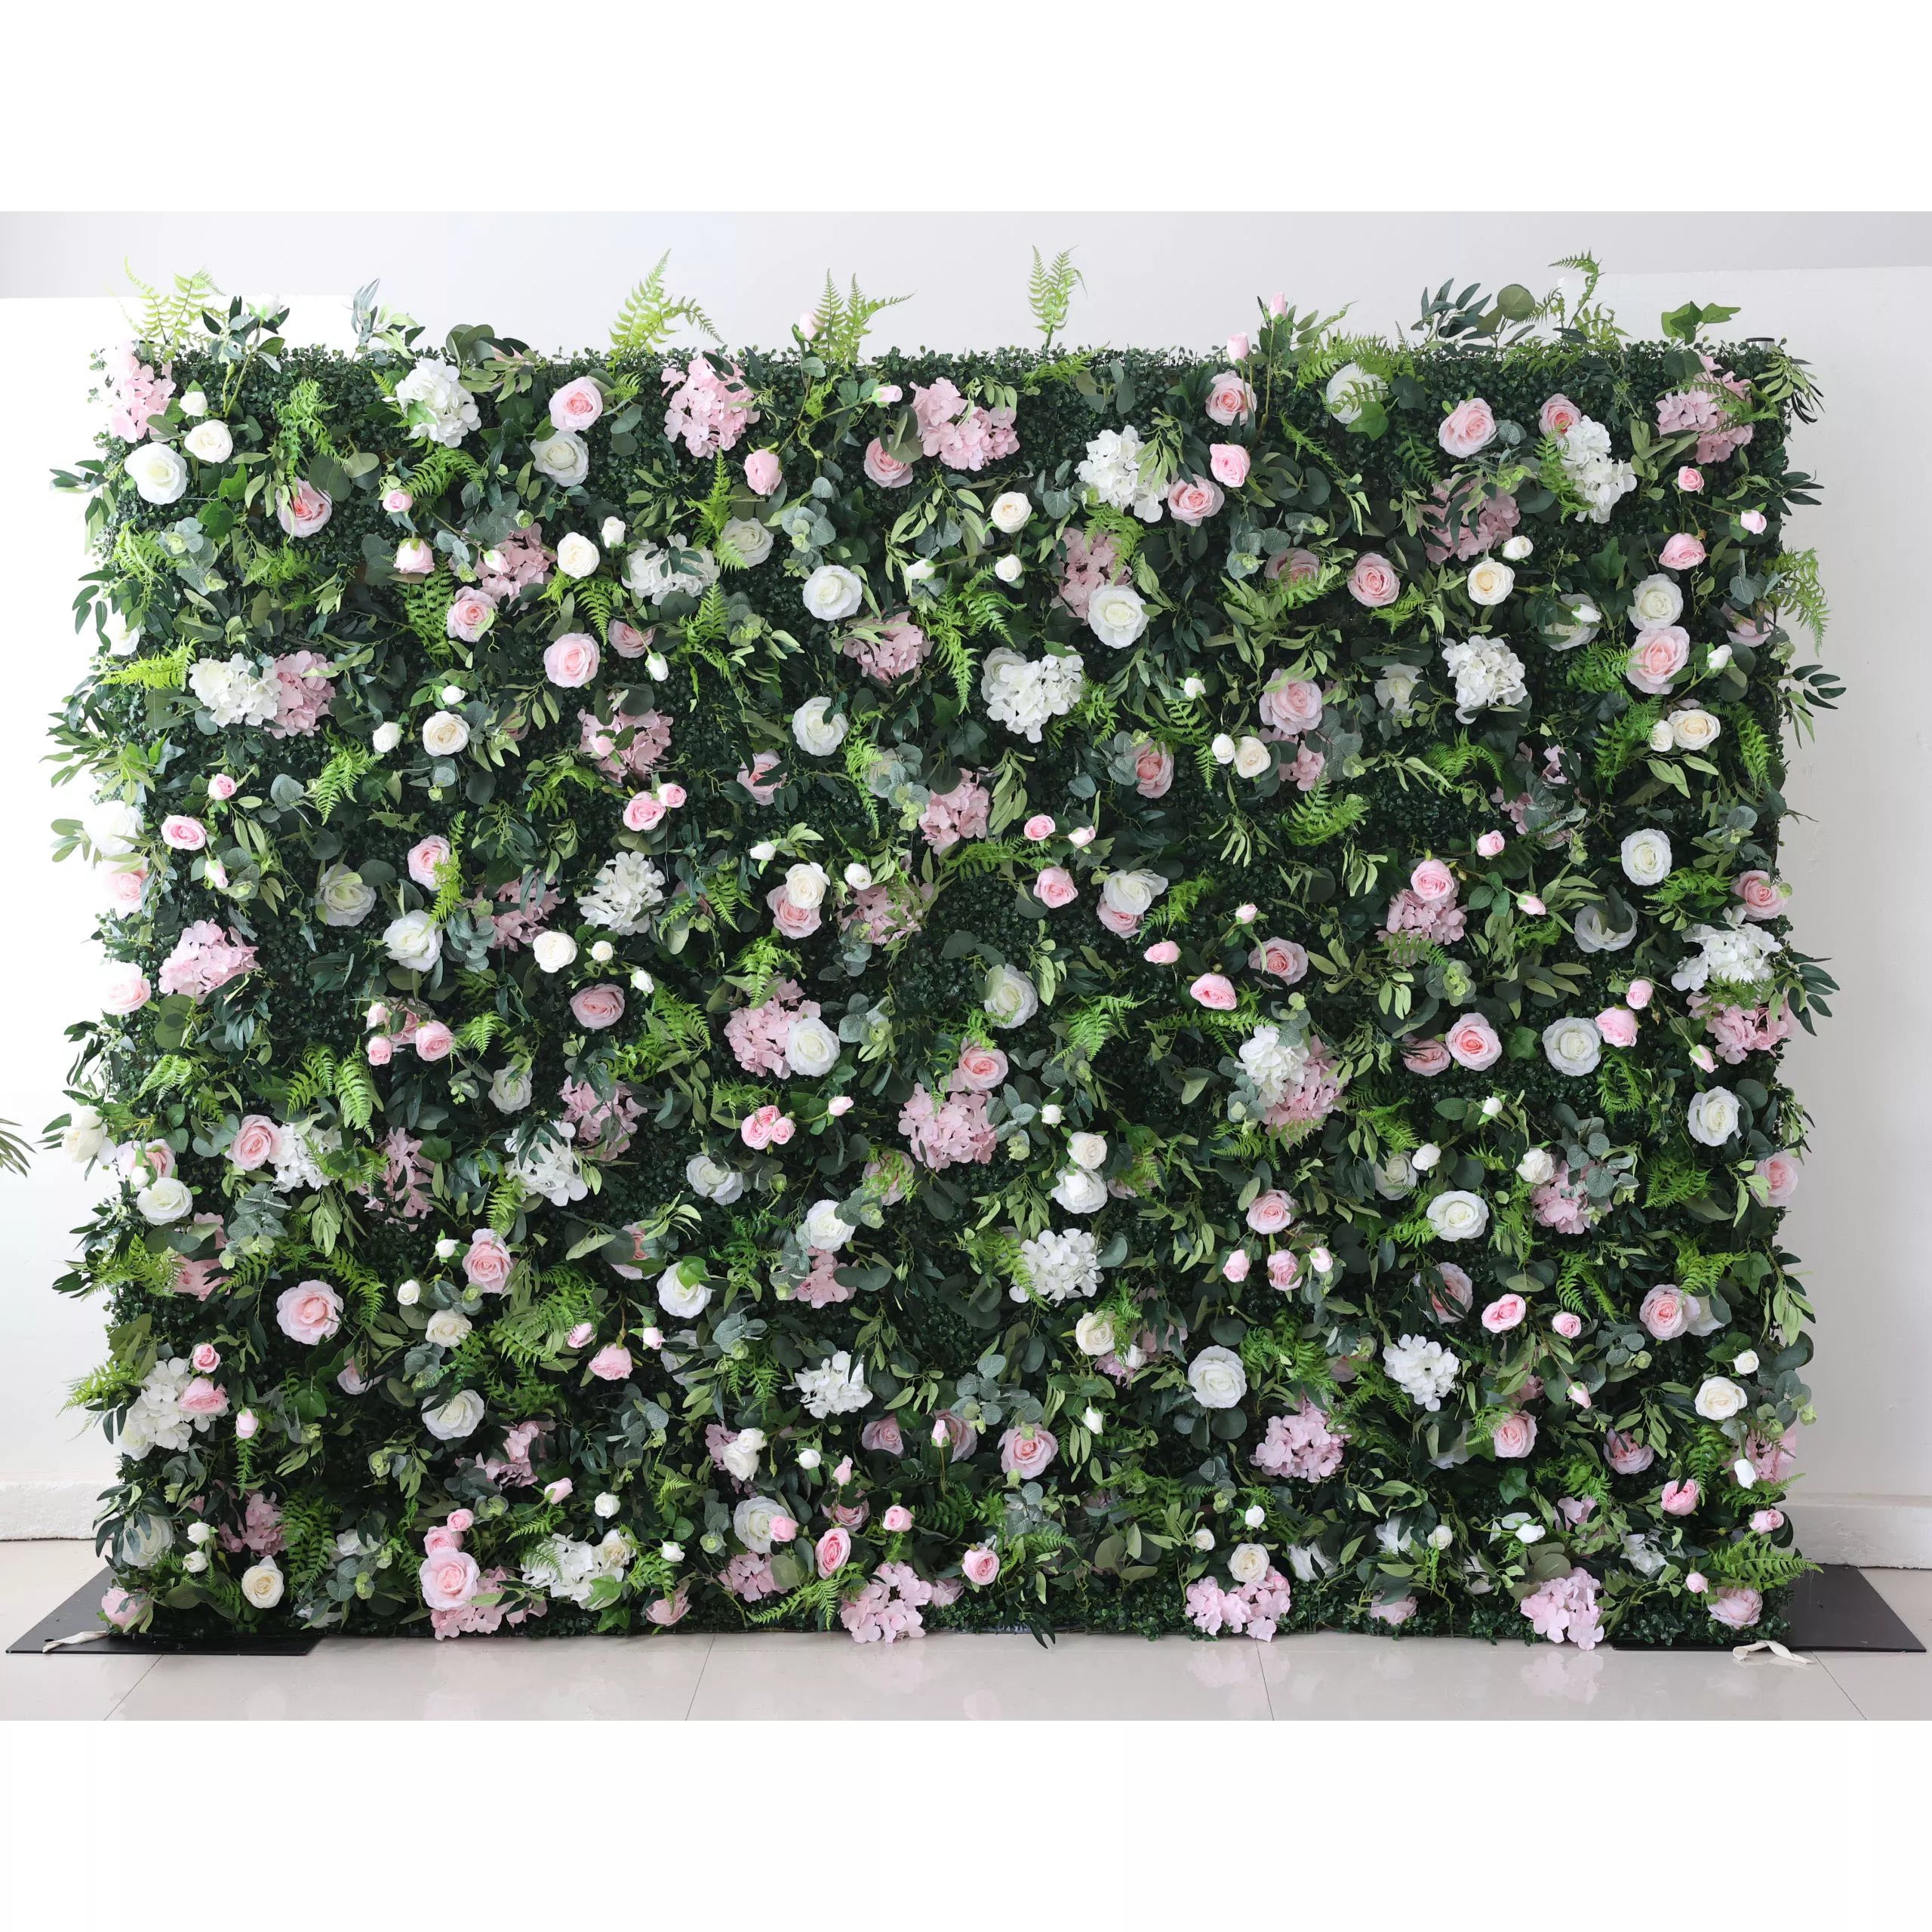 Ethereal Enchantment: Dense Verdant Foliage Meets Pastel Florals – An Idyllic Botanical Wall for Whimsical & Elegant Settings-VF-205-2